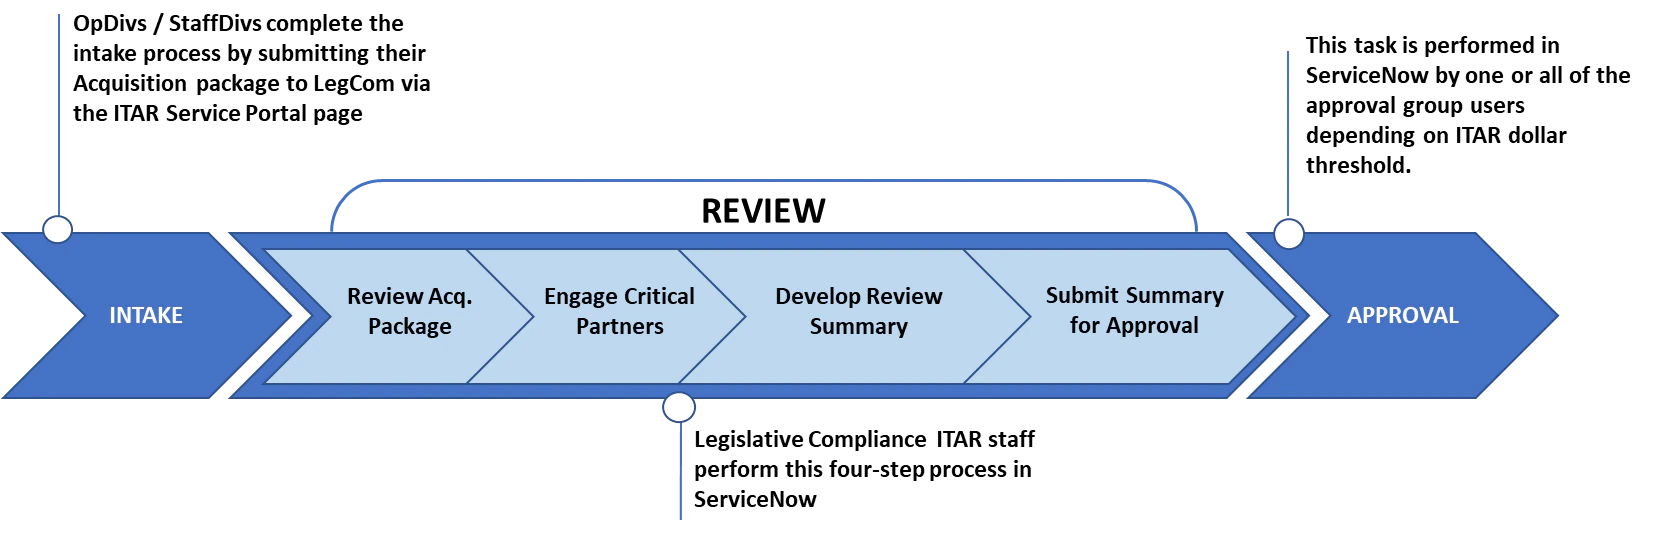 Figure 6: ITAR Reviewer Process Steps